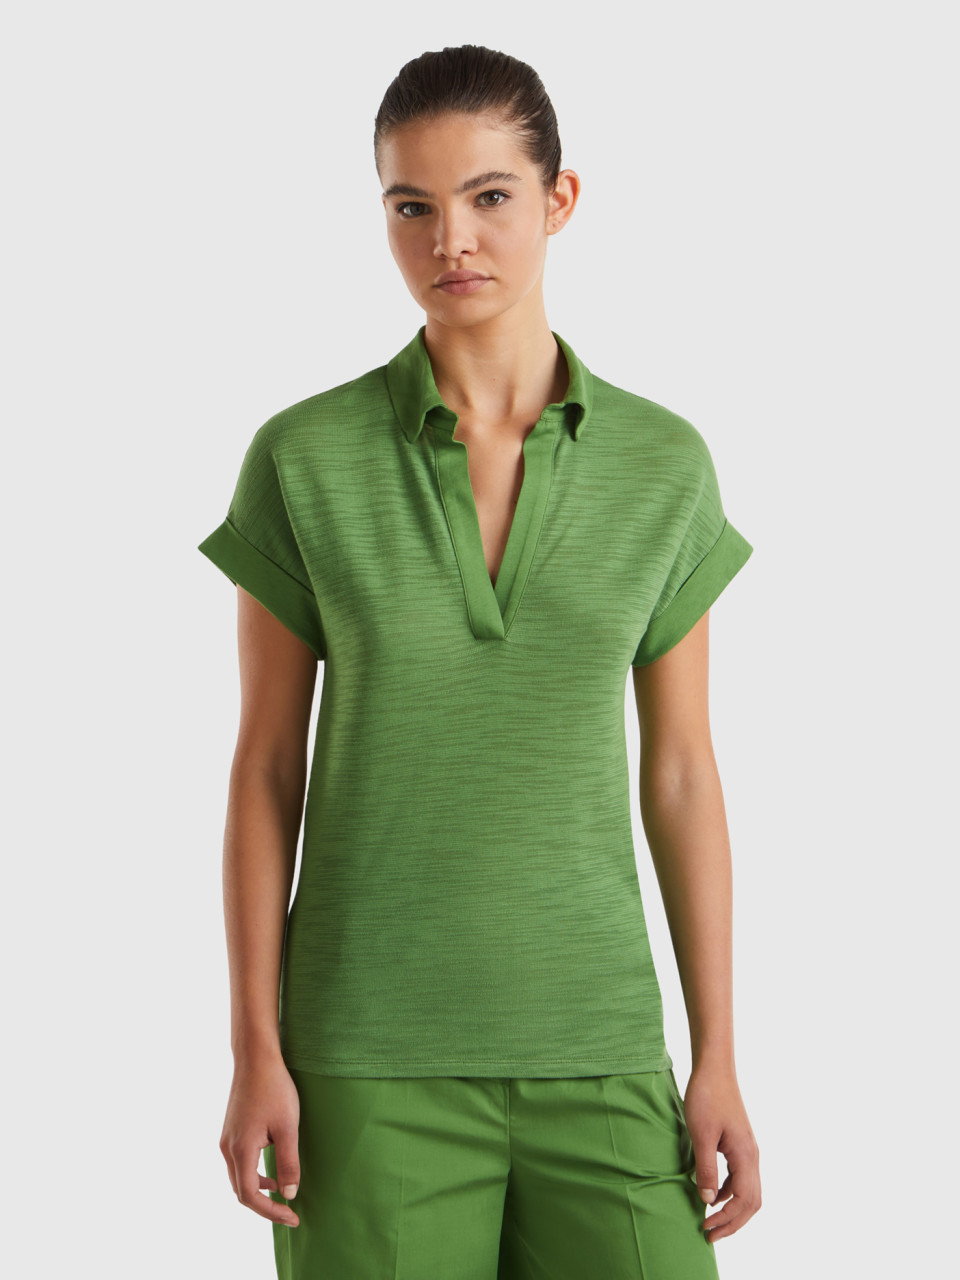 Benetton, Lightweight Polo-style T-shirt, Military Green, Women